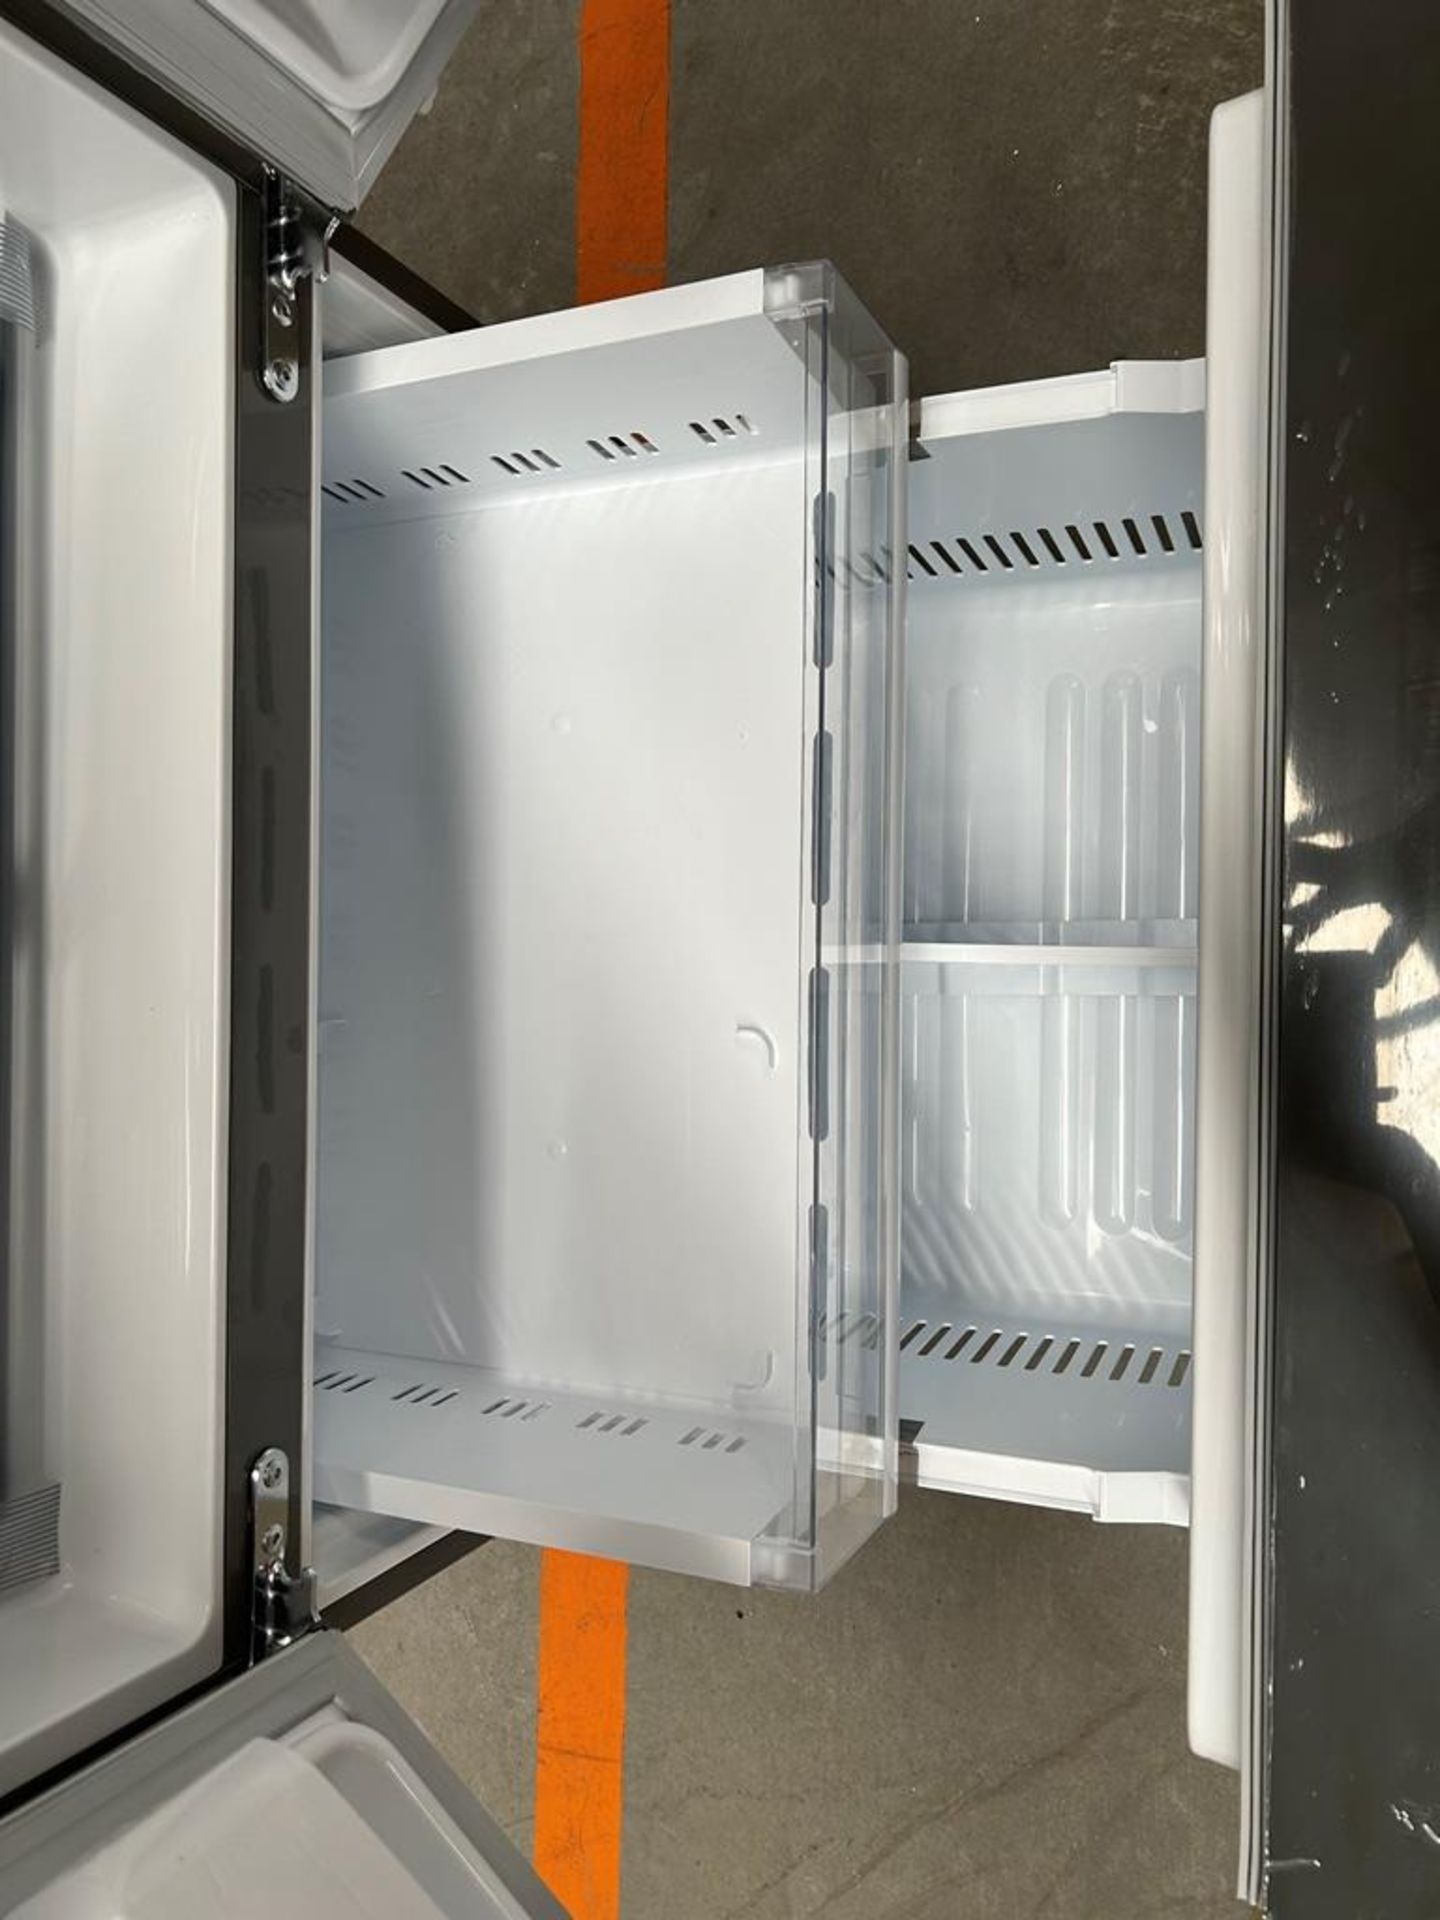 (NUEVO) Refrigerador Marca LG, Modelo GM65BGSK, Serie 25919, Color GRIS - Image 8 of 9